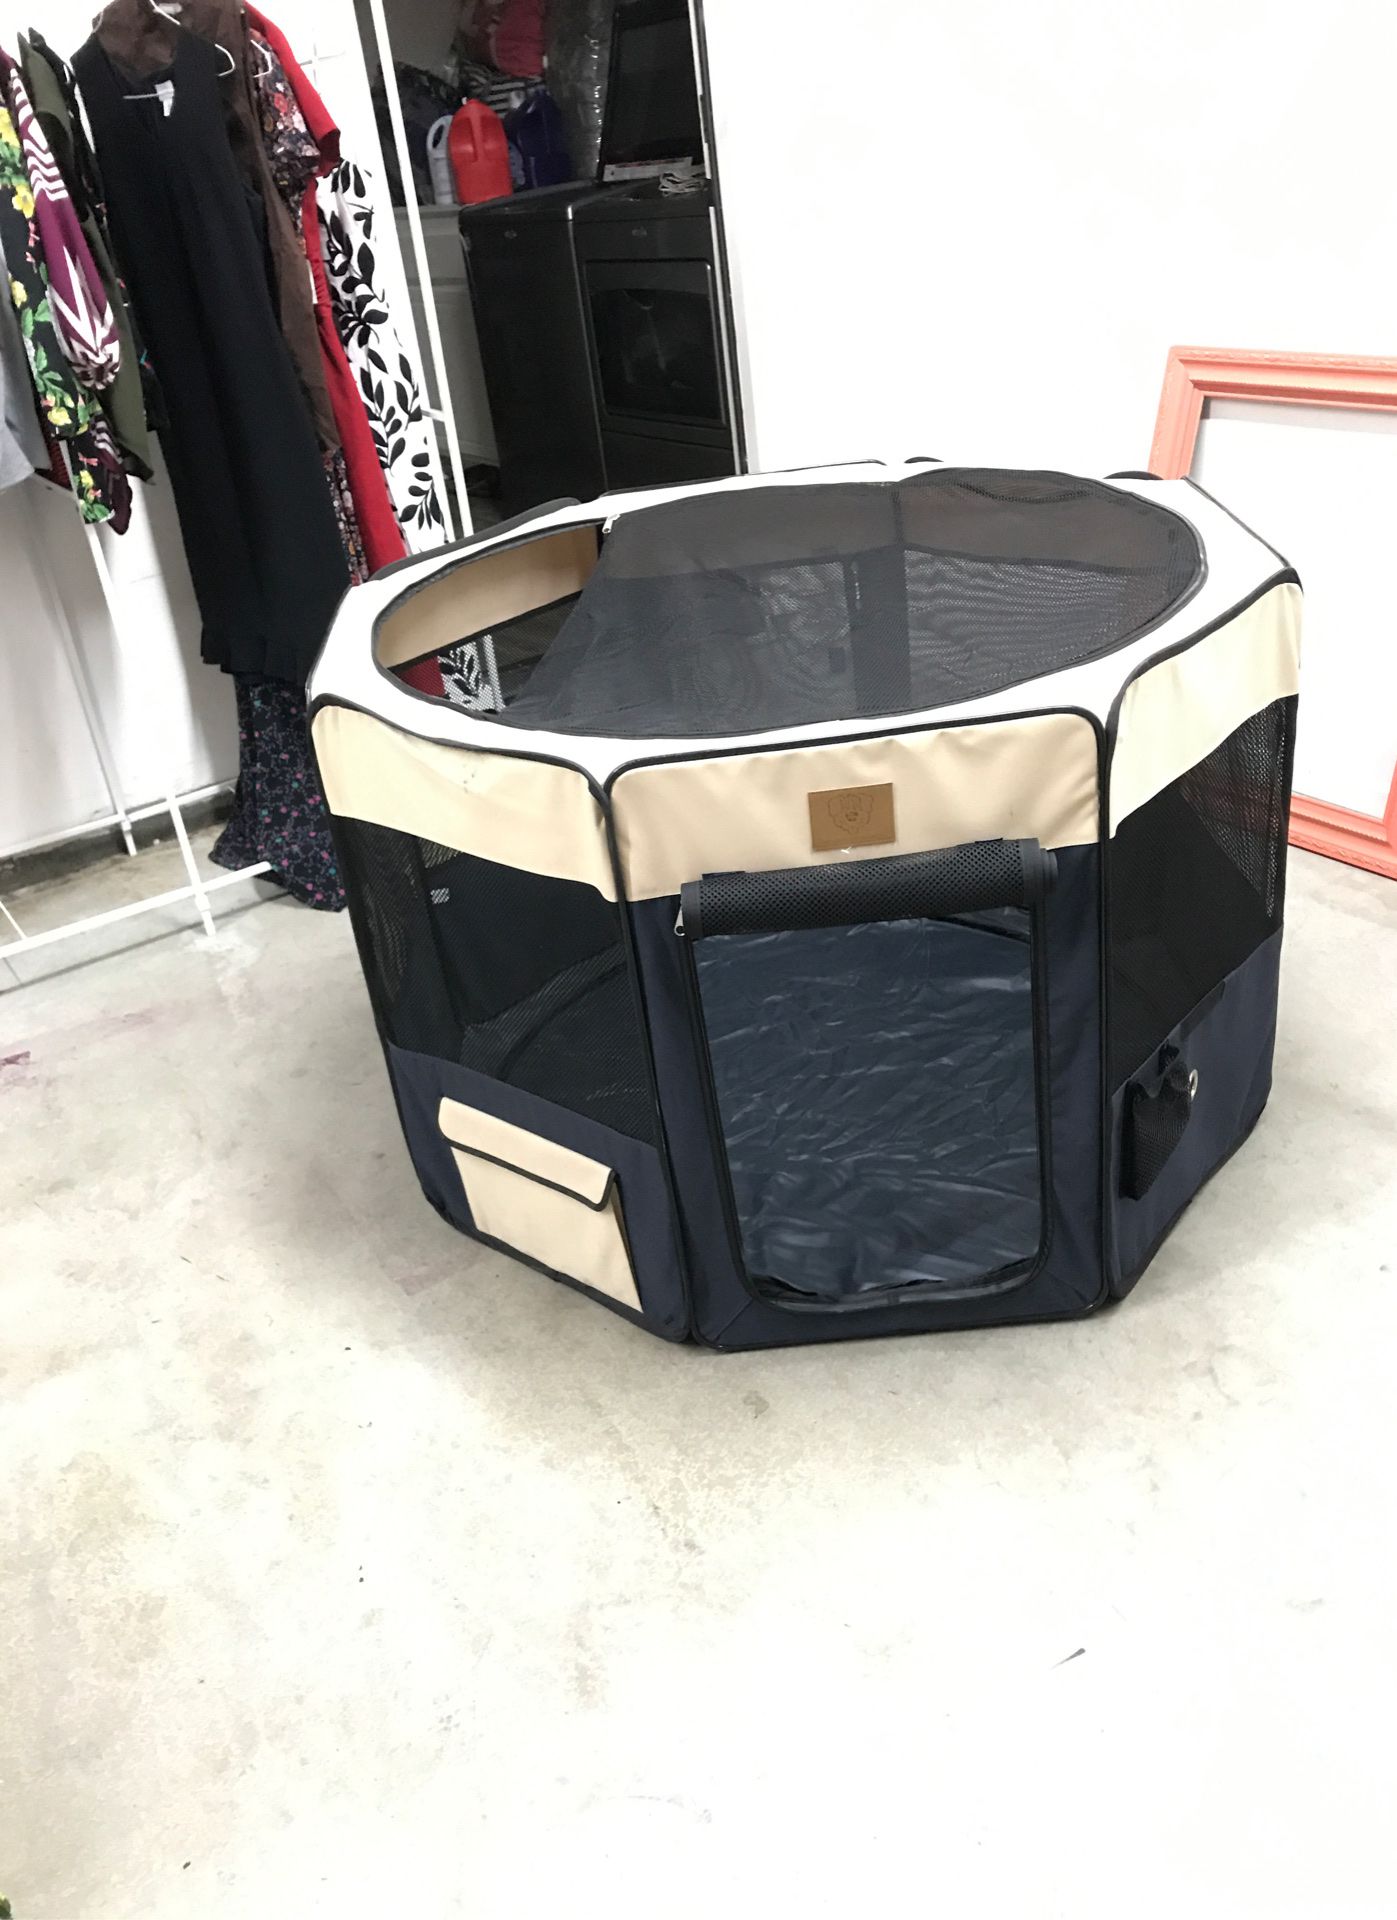 Portable dog crate small to medium dog